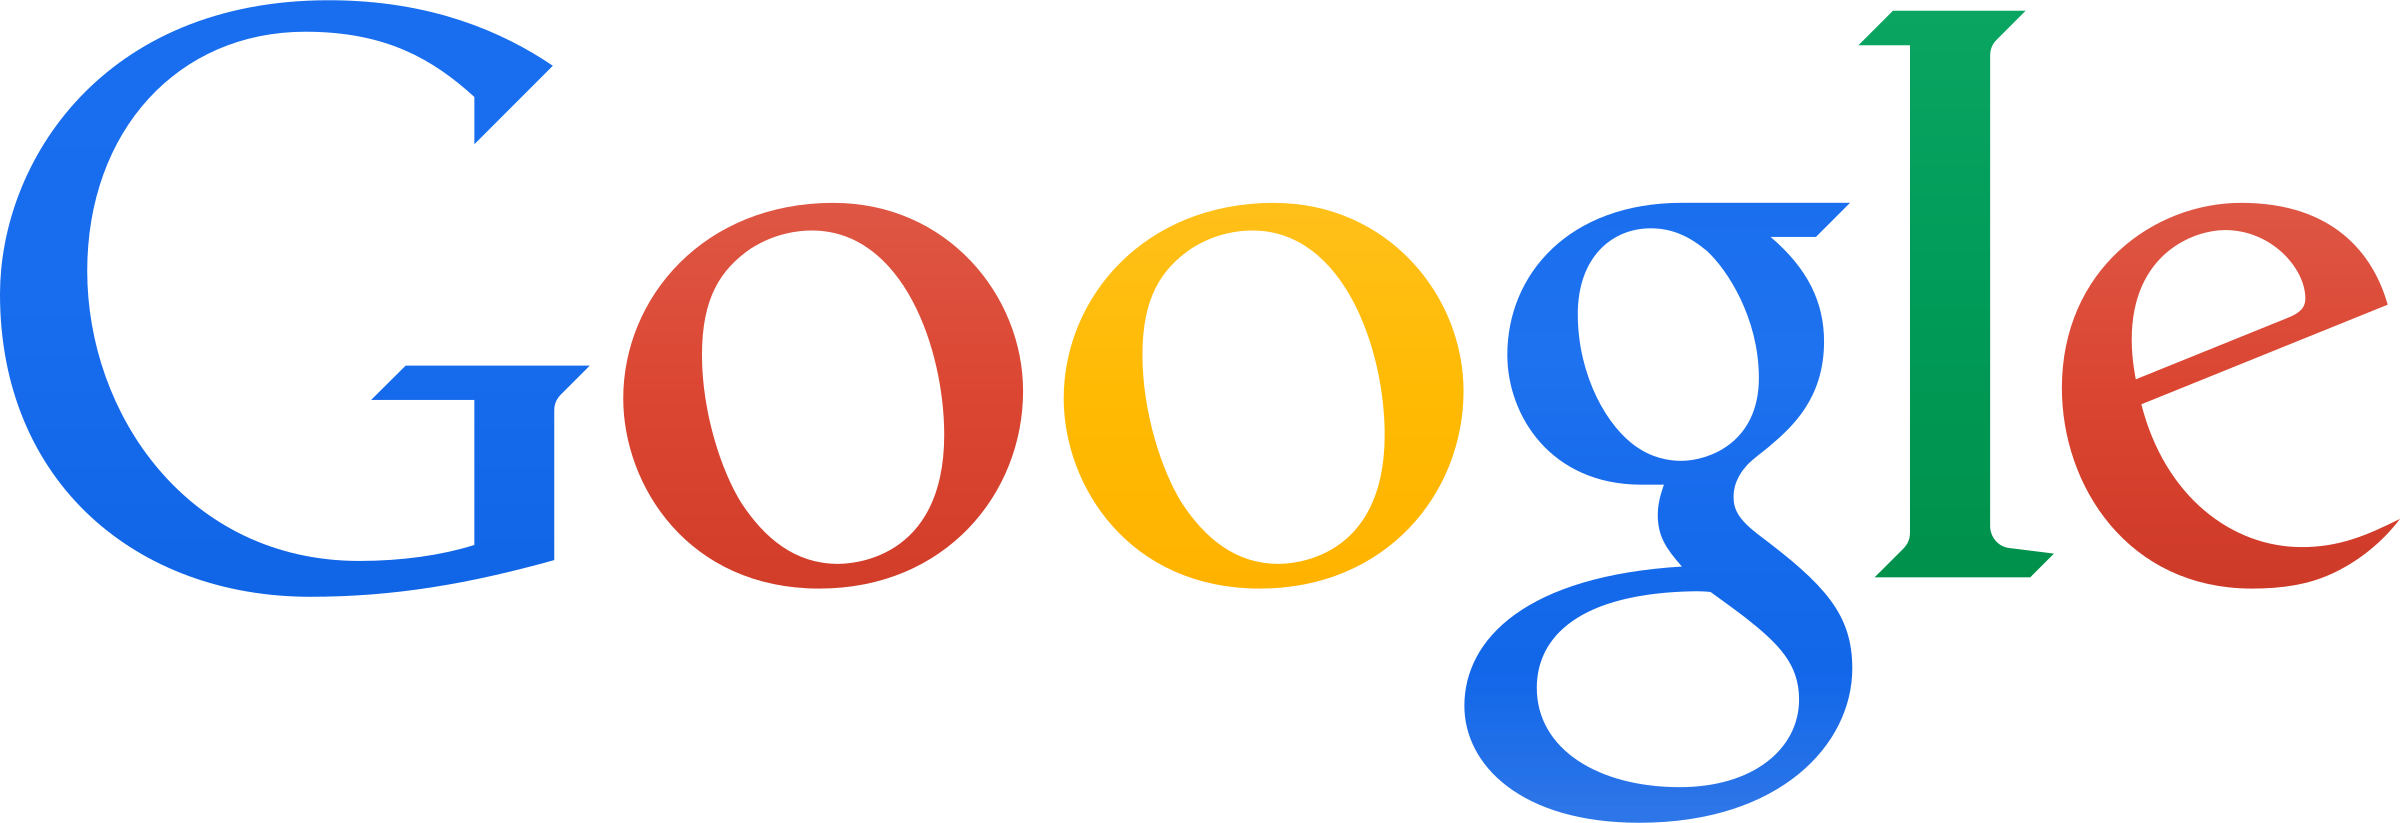 google-1-1-logo-png-transparent